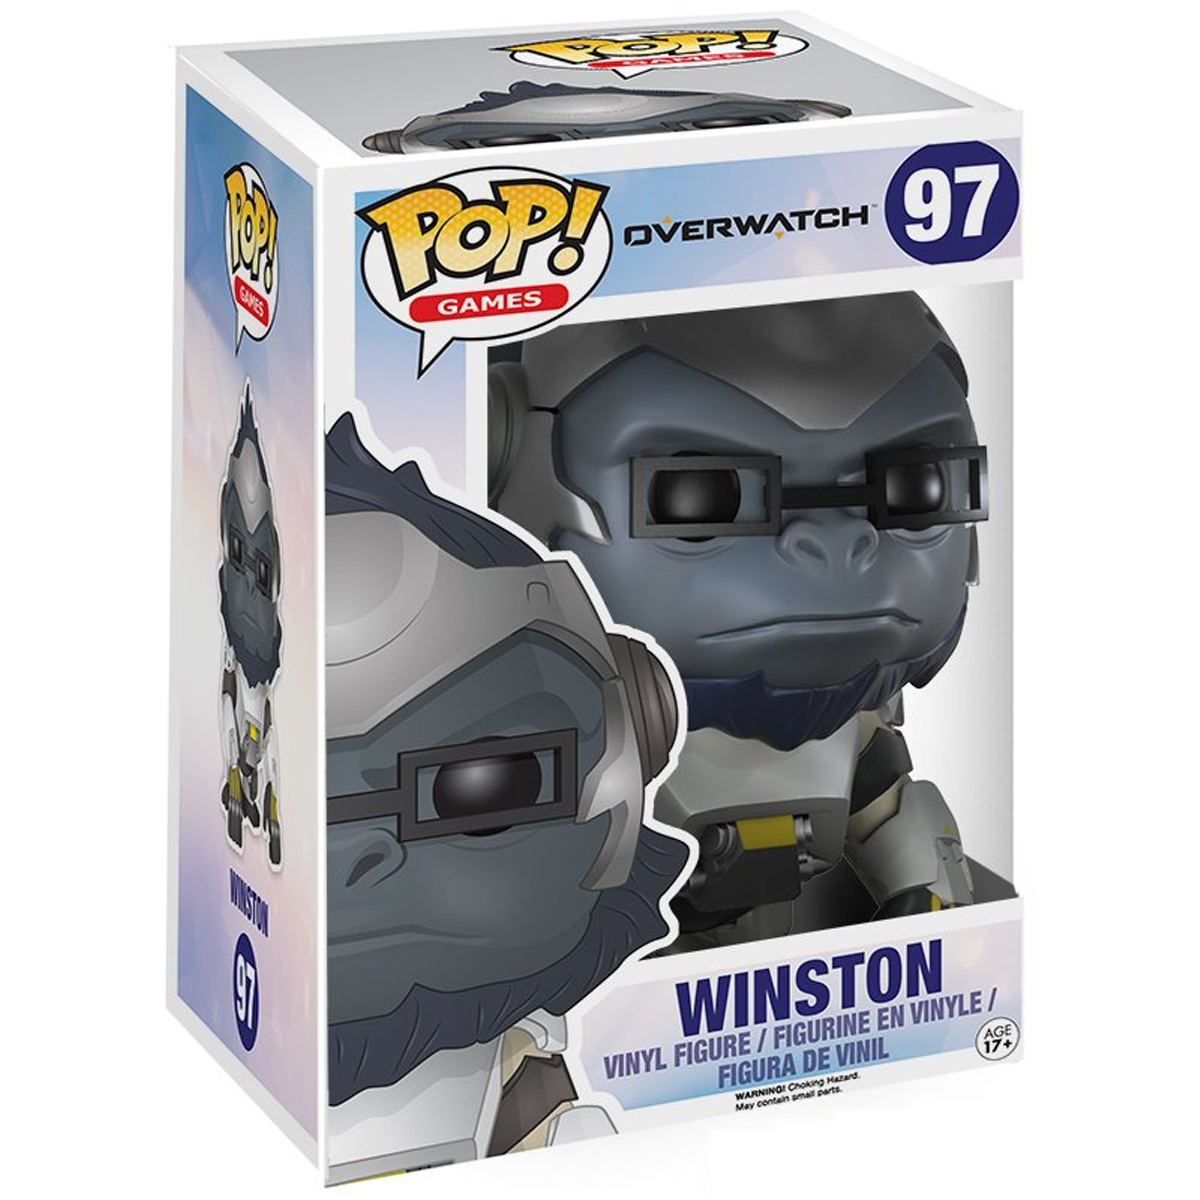 Winston #97 - Overwatch - Funko Pop! Games